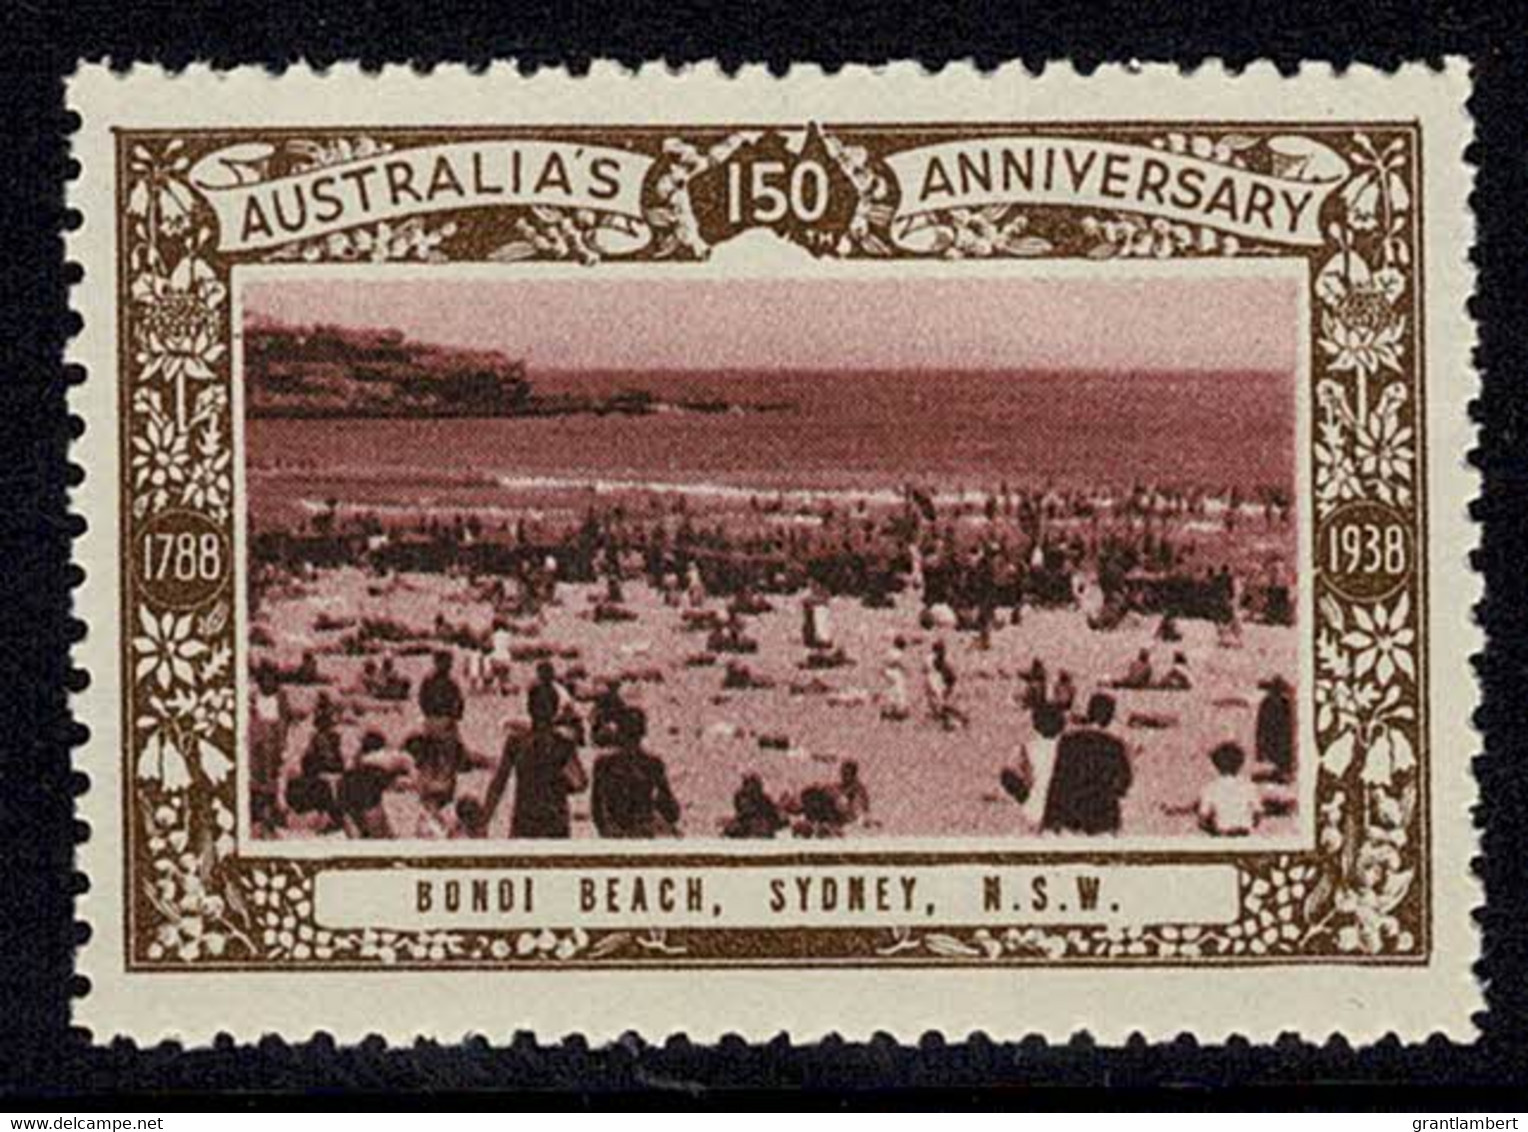 Australia 1938 Bondi Beach, Sydney - NSW 150th Anniversary Cinderella MNH - Cinderellas